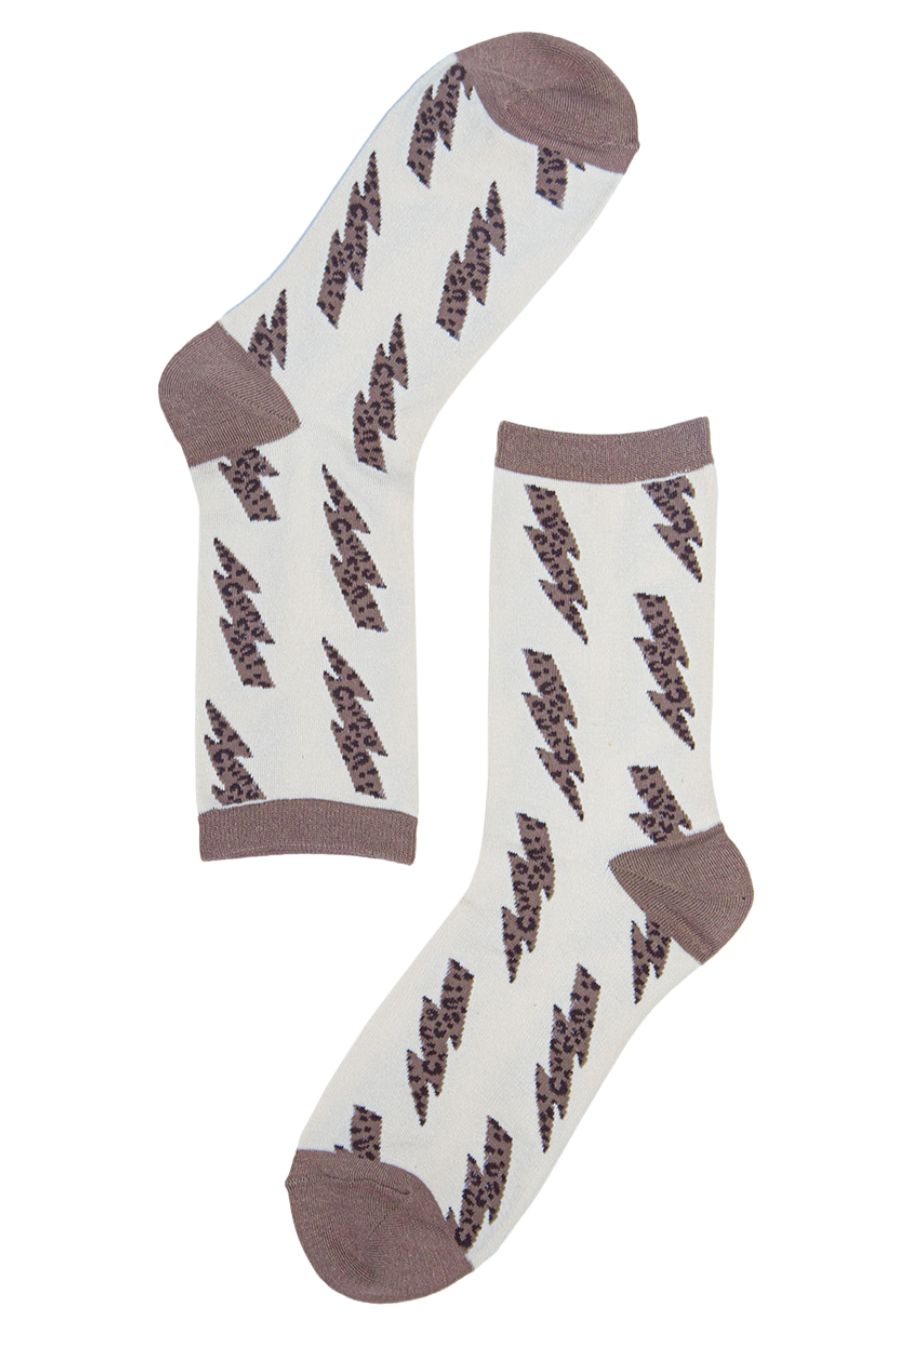 cream socks with brown leoaprd print thunder bolts